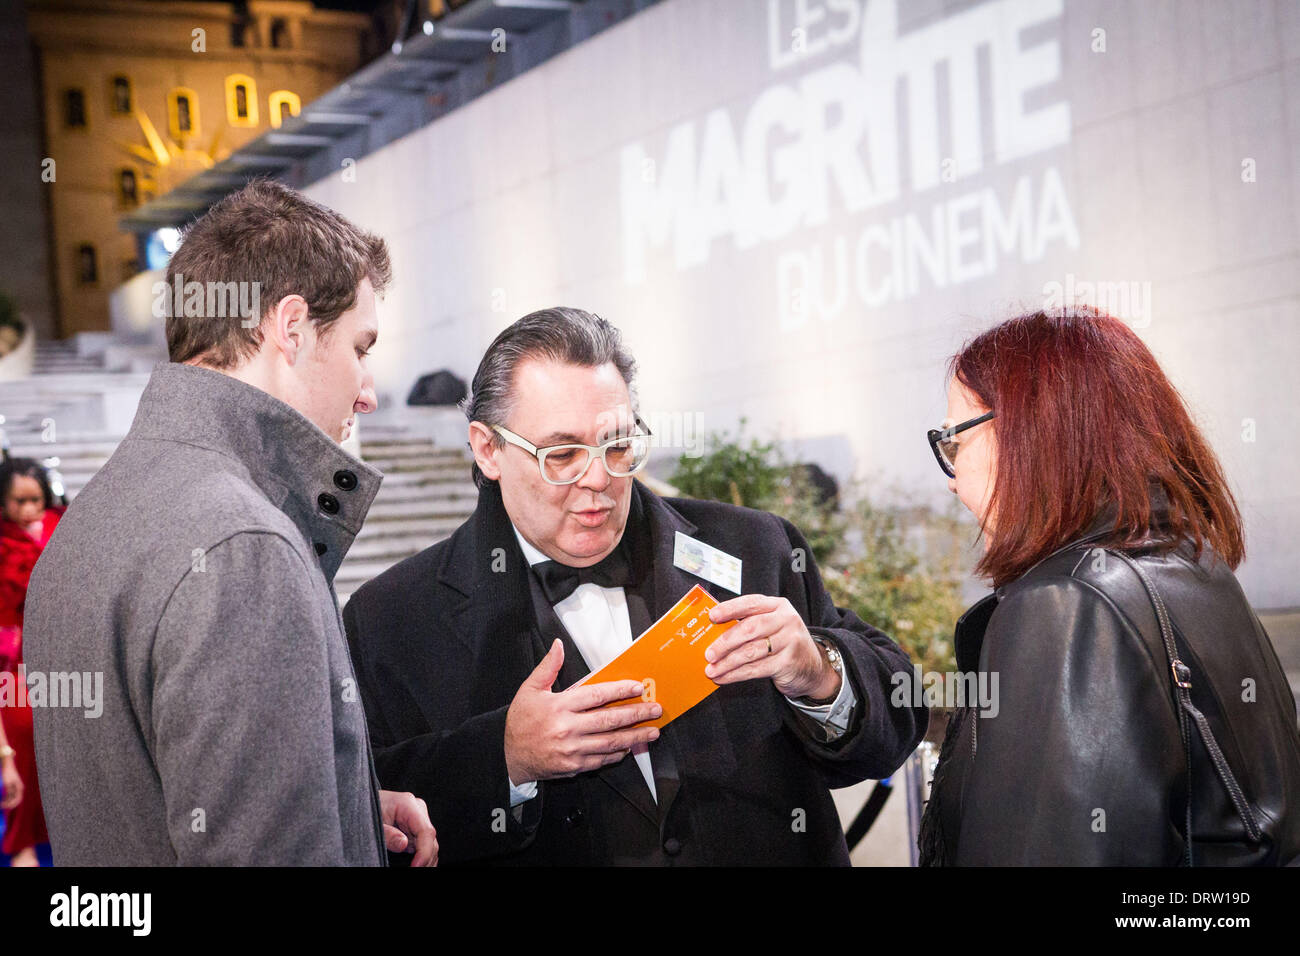 Bruselas, Bélgica. 1 Feb, 2014. Philippe Reynaert, director de Wallimage en la cuarta ceremonia de Magritte celebrando lo mejor de la industria del cine belga. © Aurore Belot/NurPhoto/ZUMAPRESS.com/Alamy Live News Foto de stock